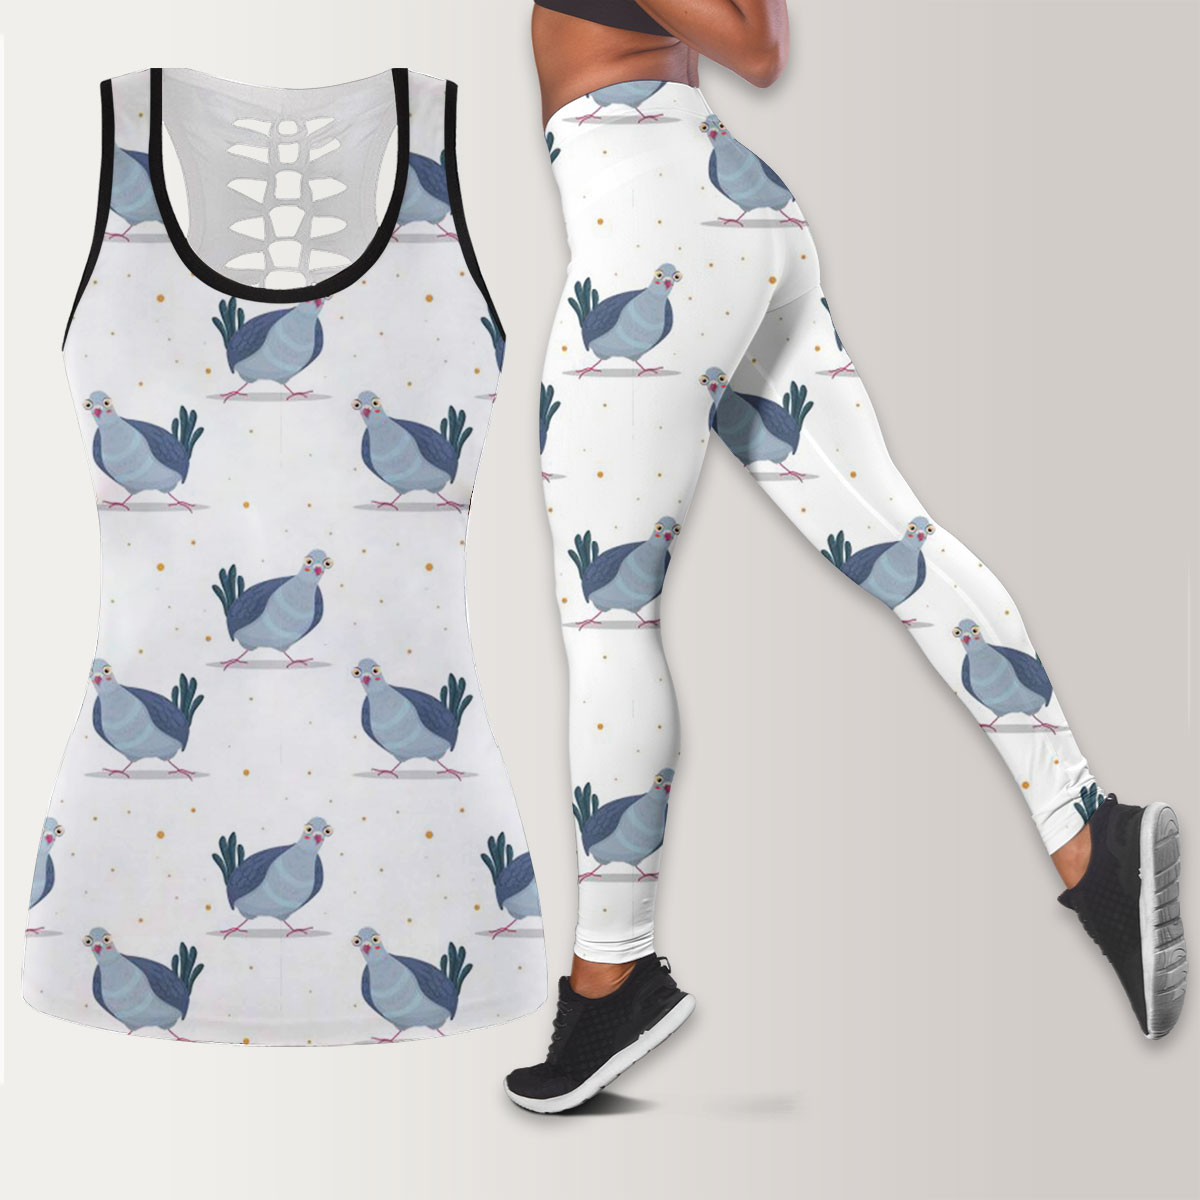 Cute Pigeon Monogram Legging Tank Top set